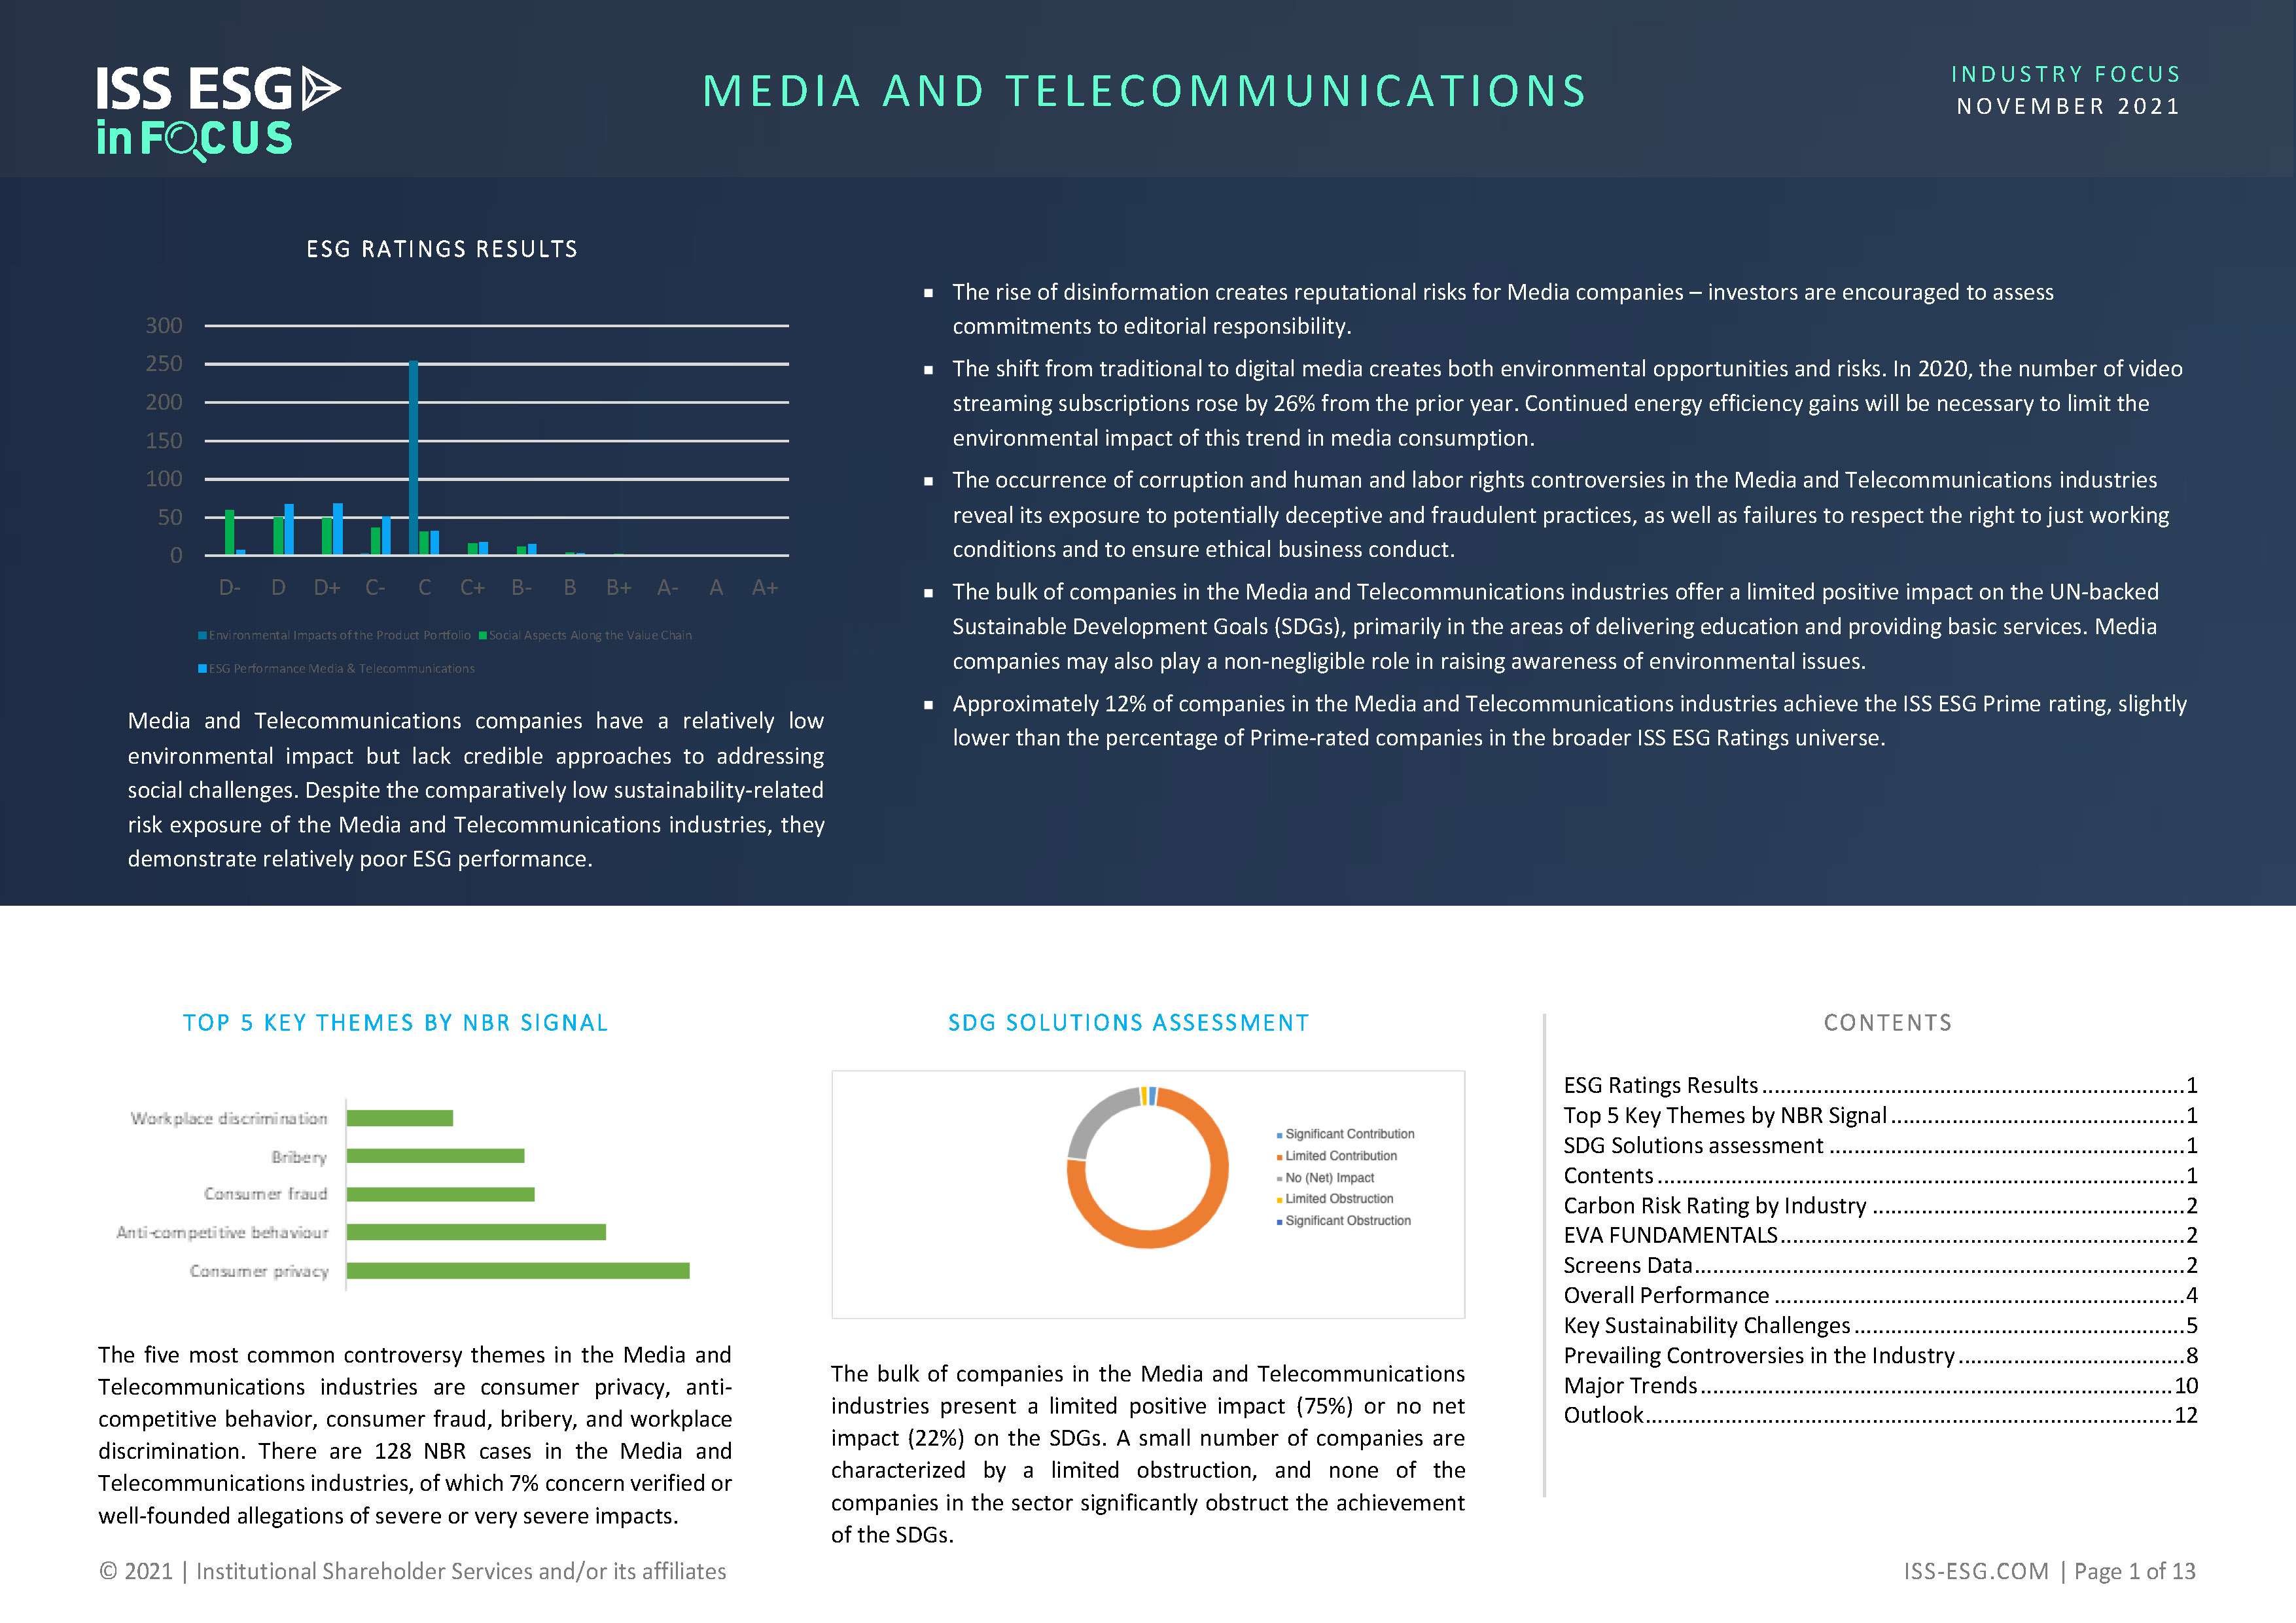 InFocus: Media and Telecommunications